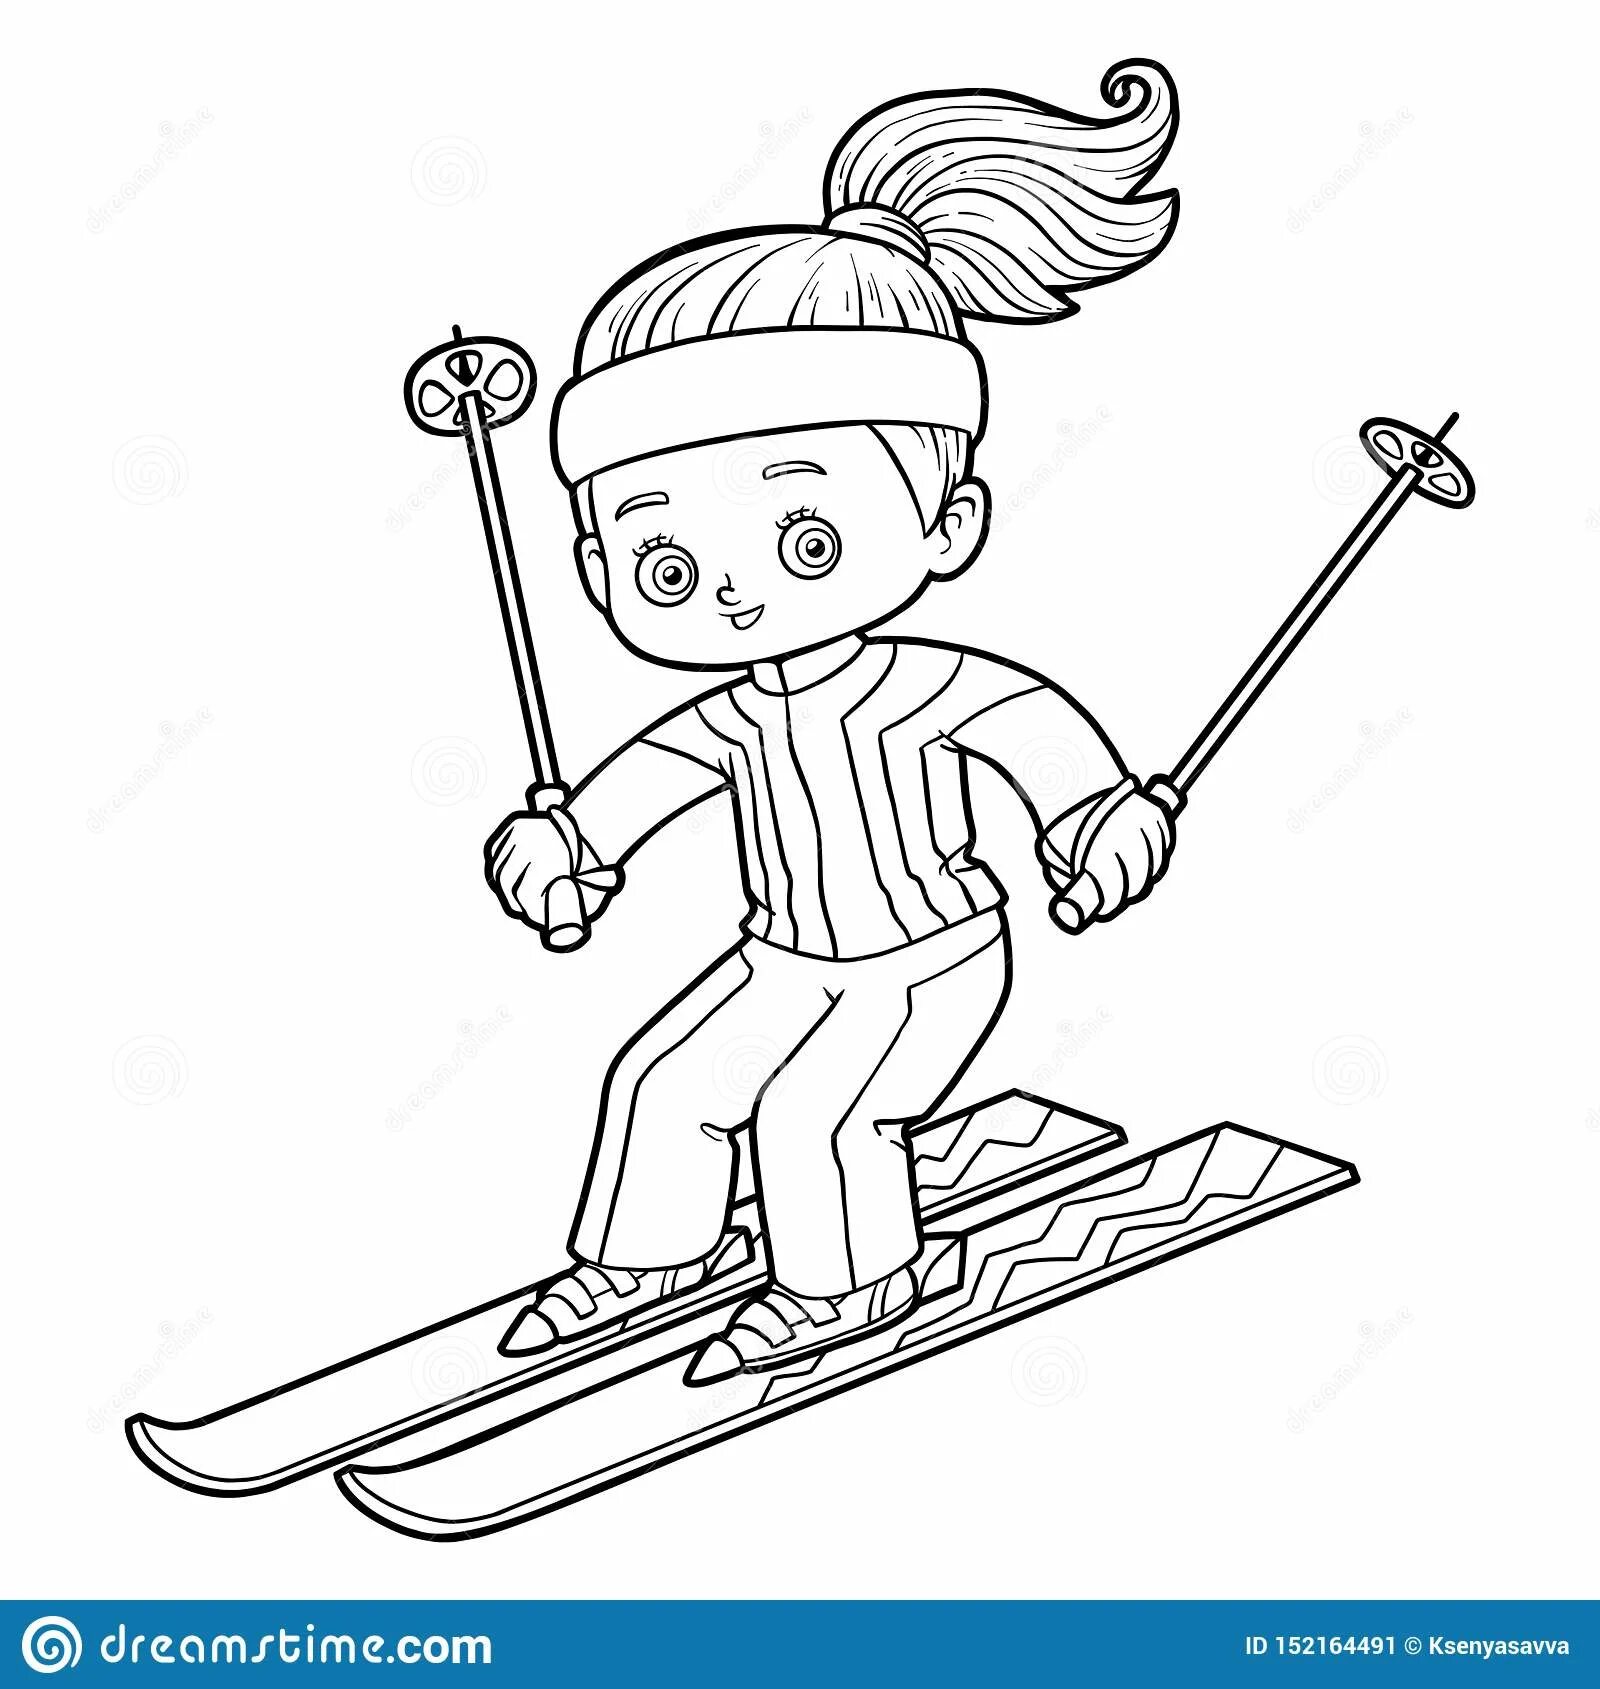 Boy skiing for children #1